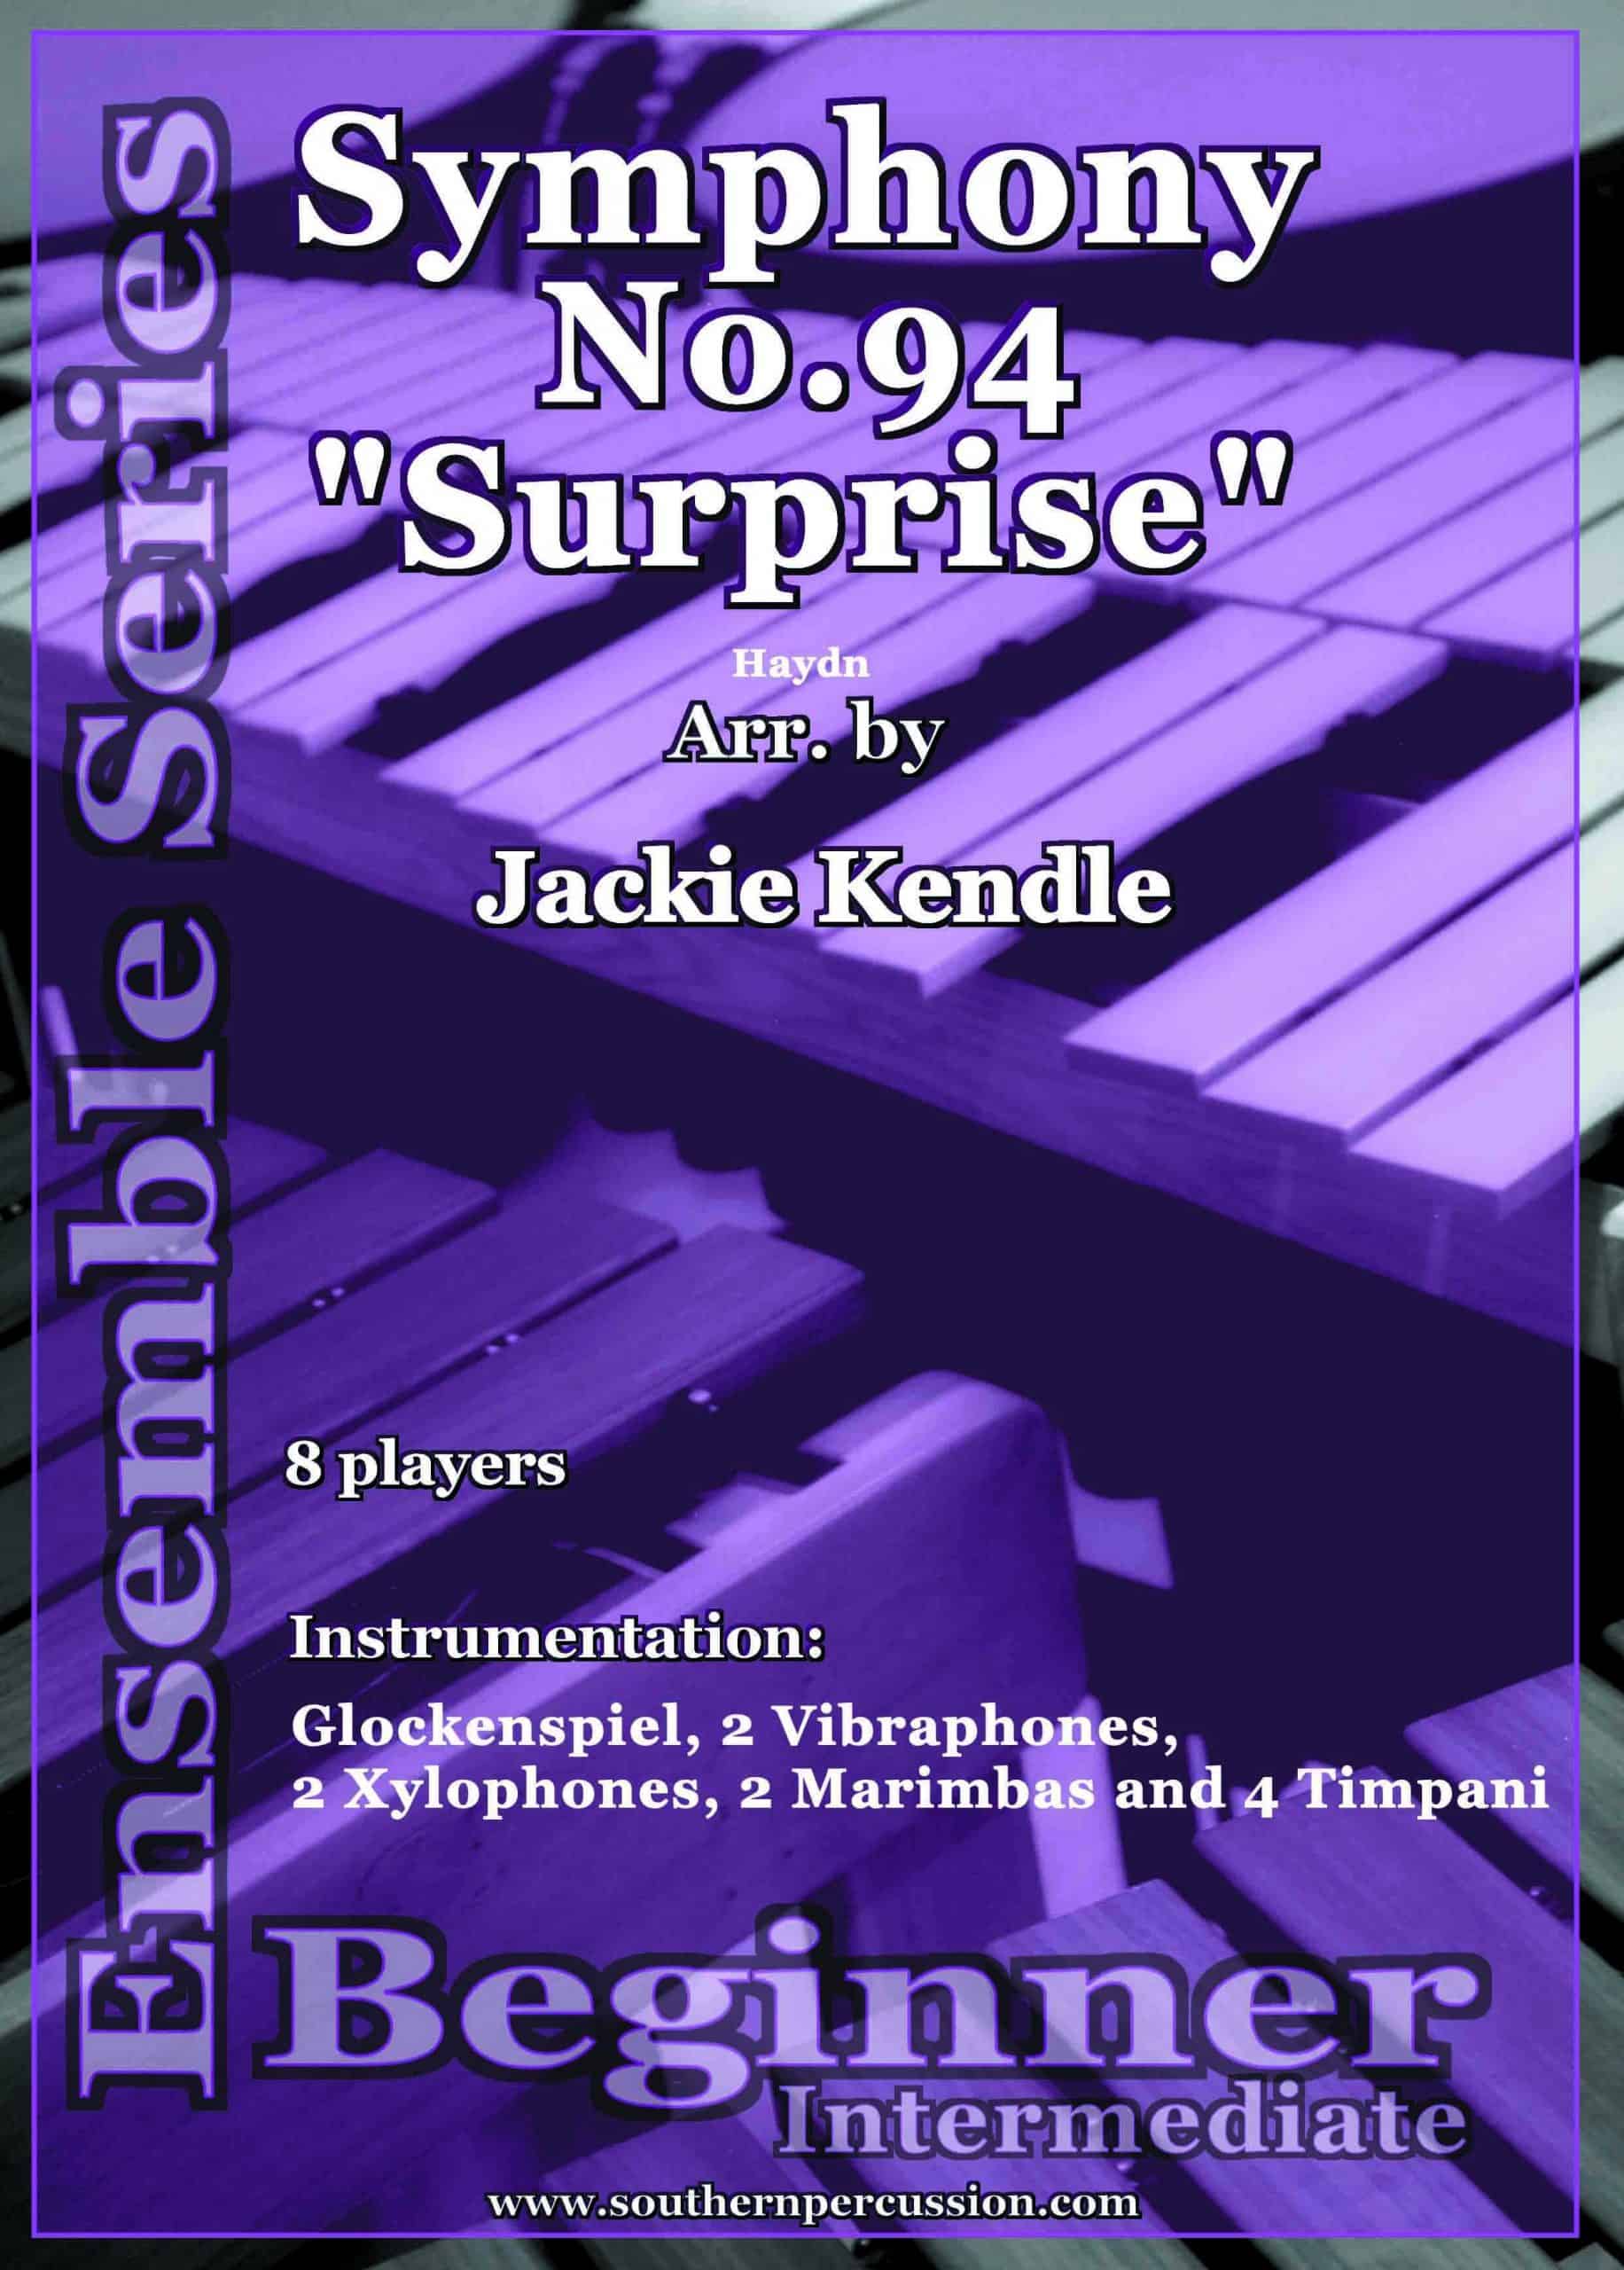 Symphony No. 94 "Surprise" by Haydn arr. Jackie Kendle